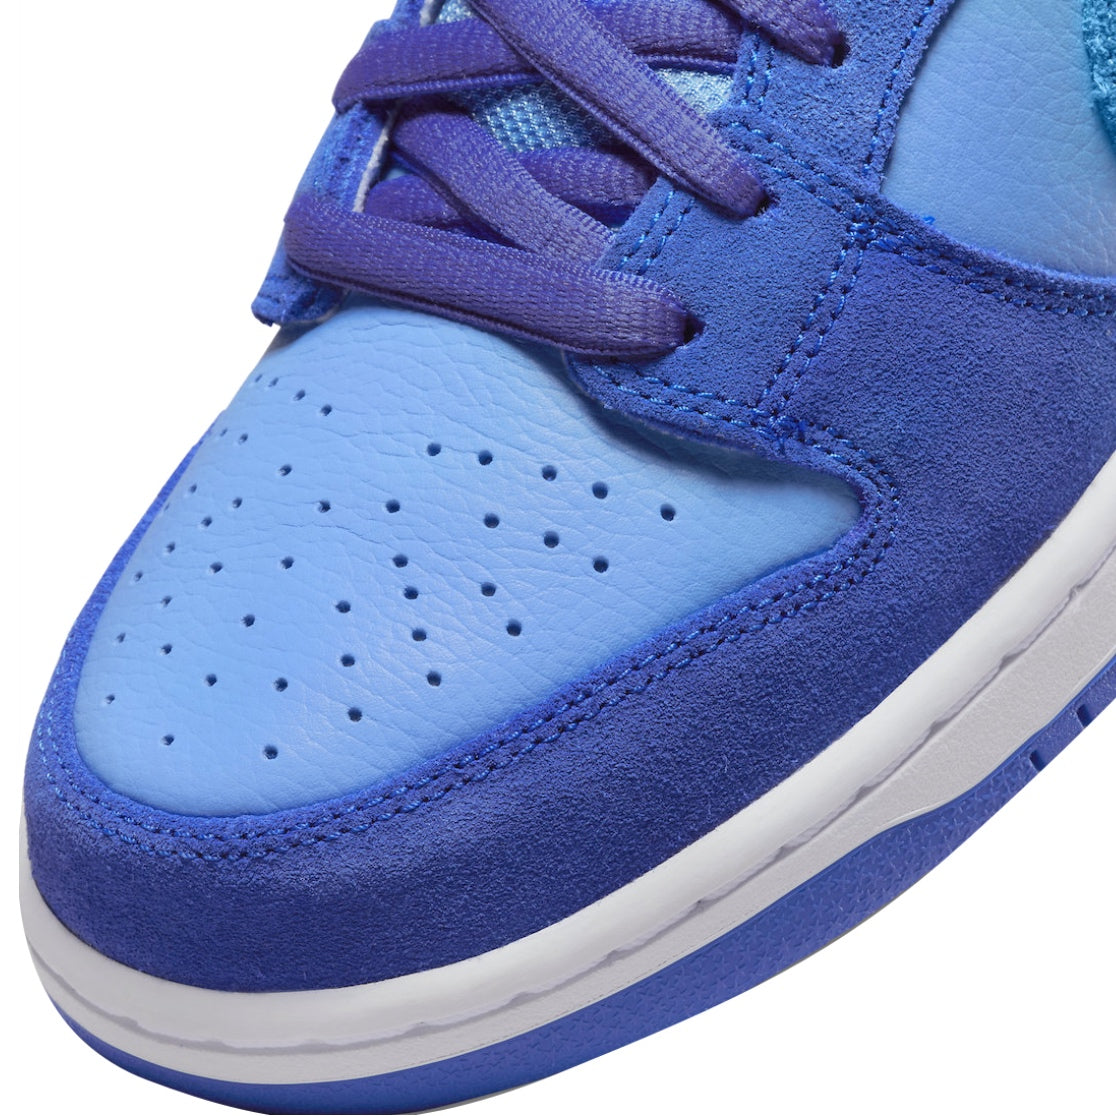 Nike SB Dunk Low “Blue Raspberry”